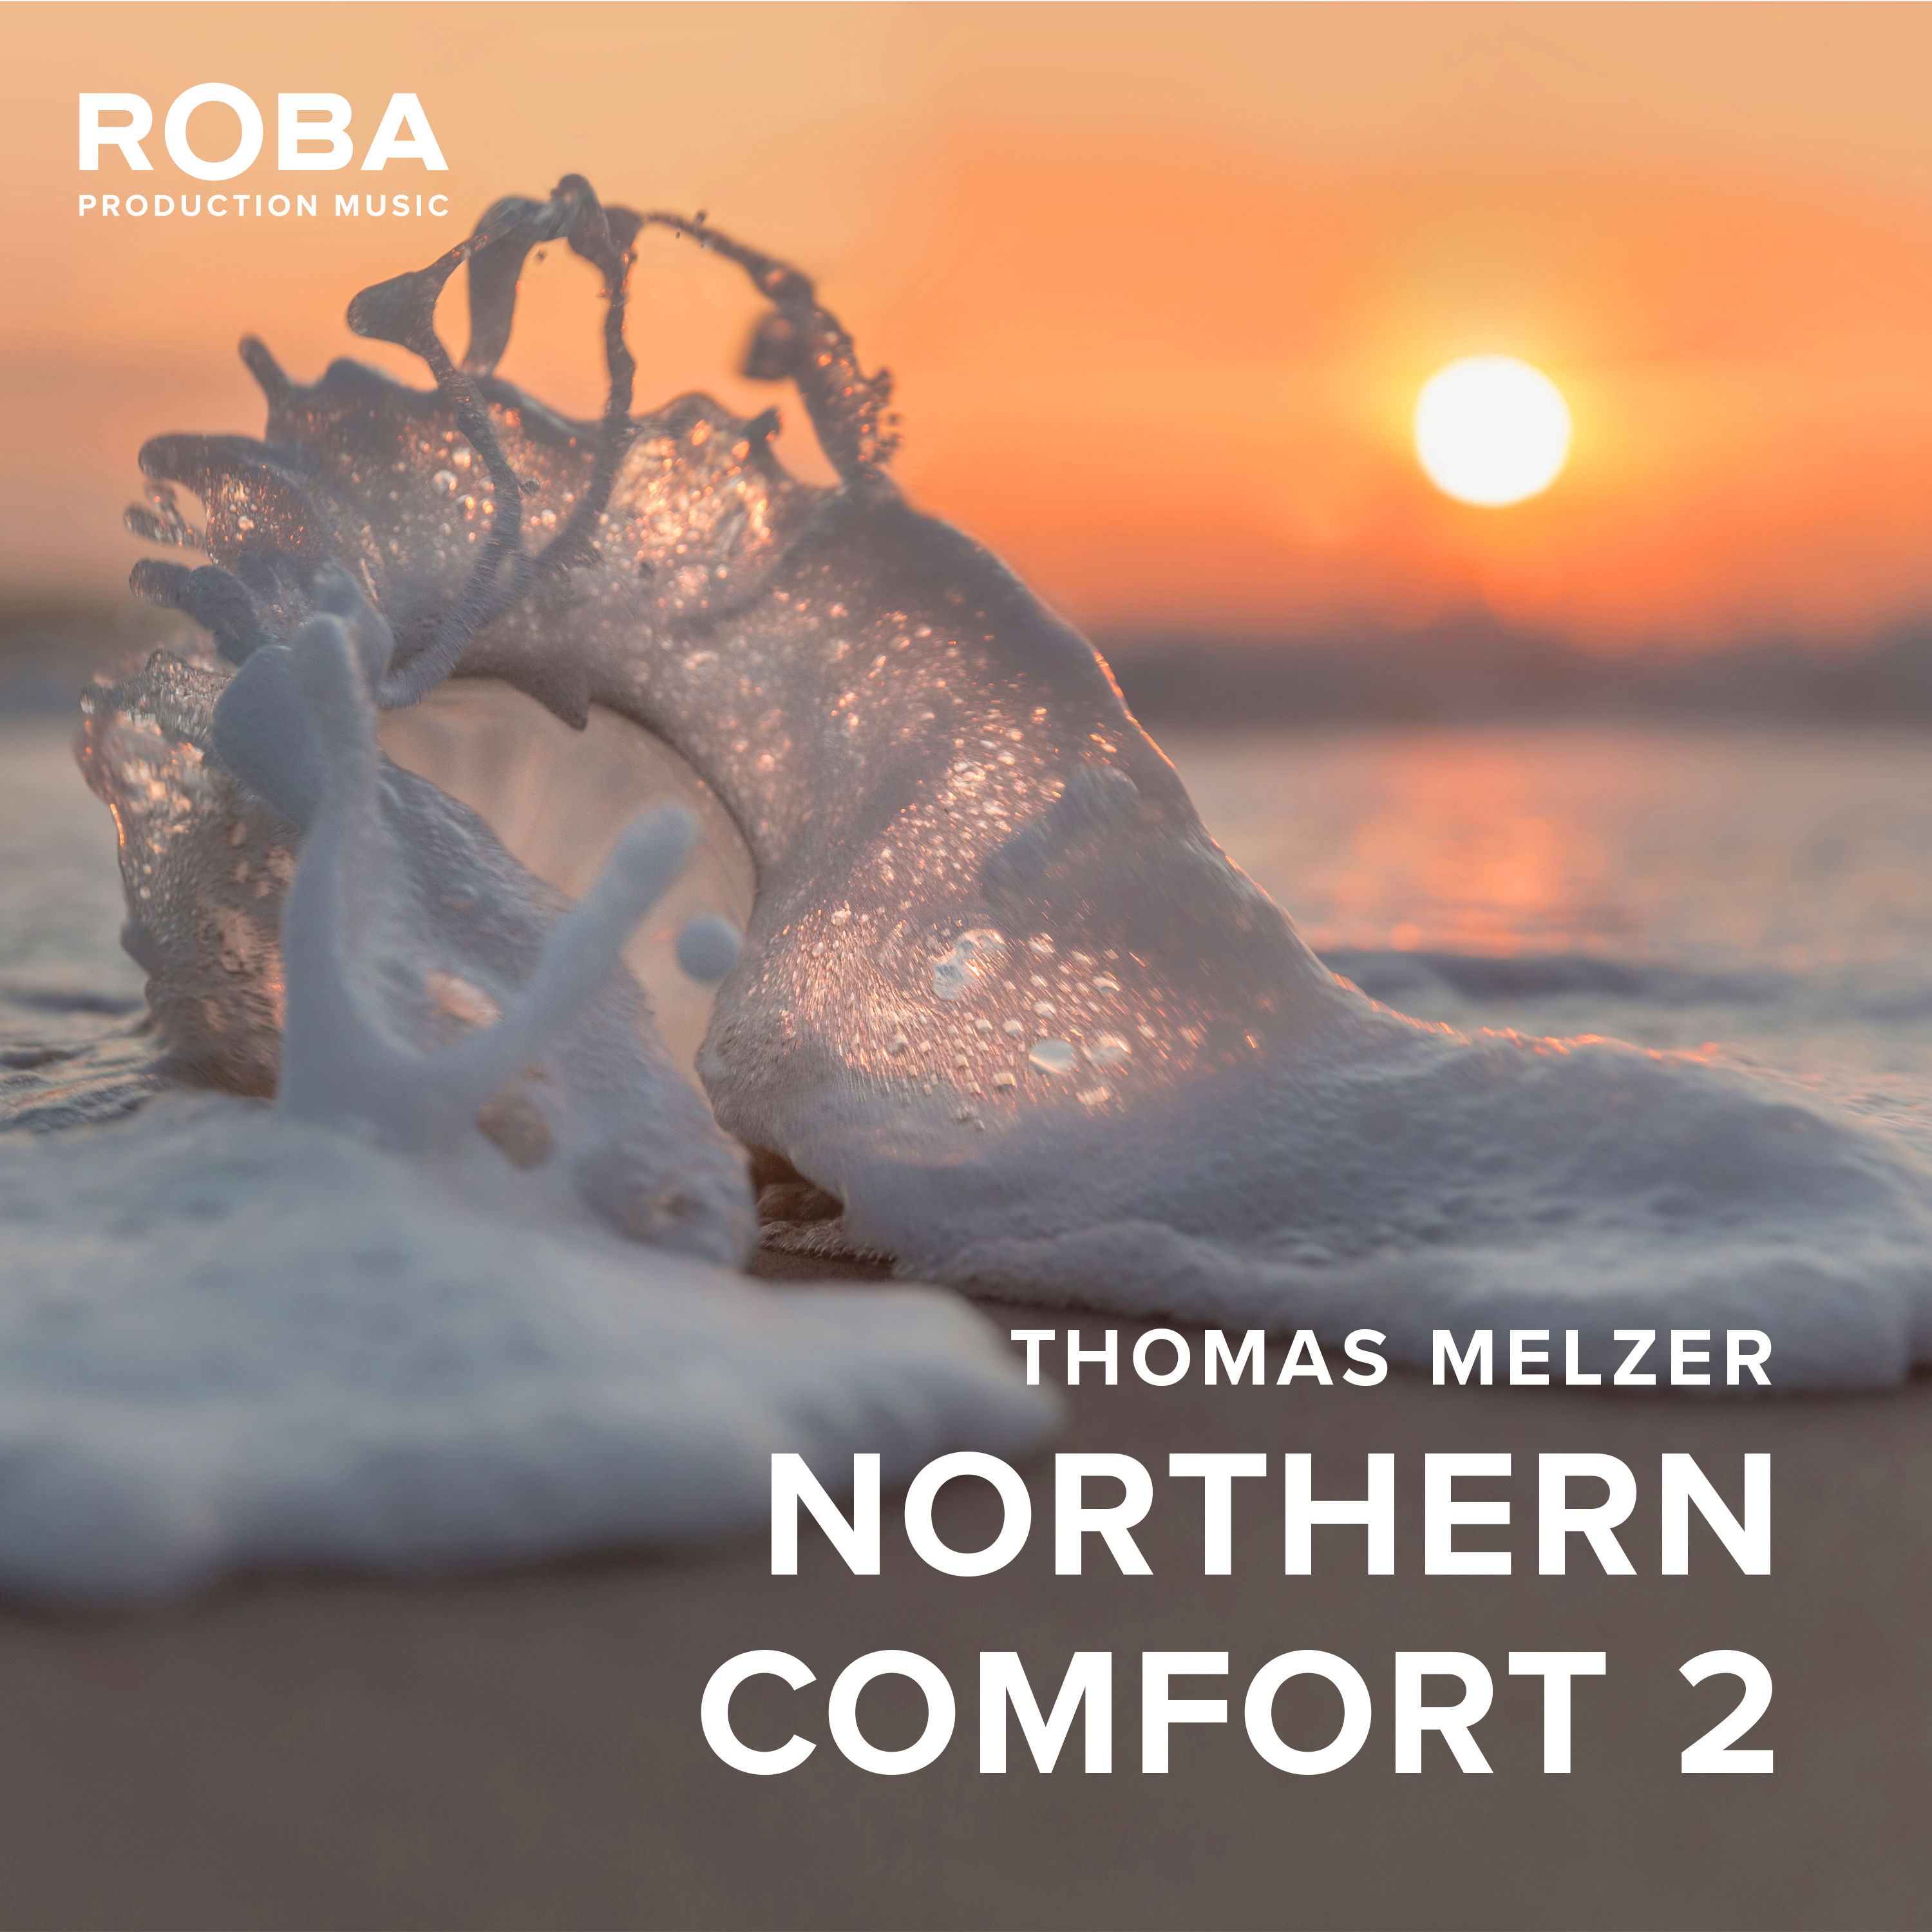 Northern Comfort 2